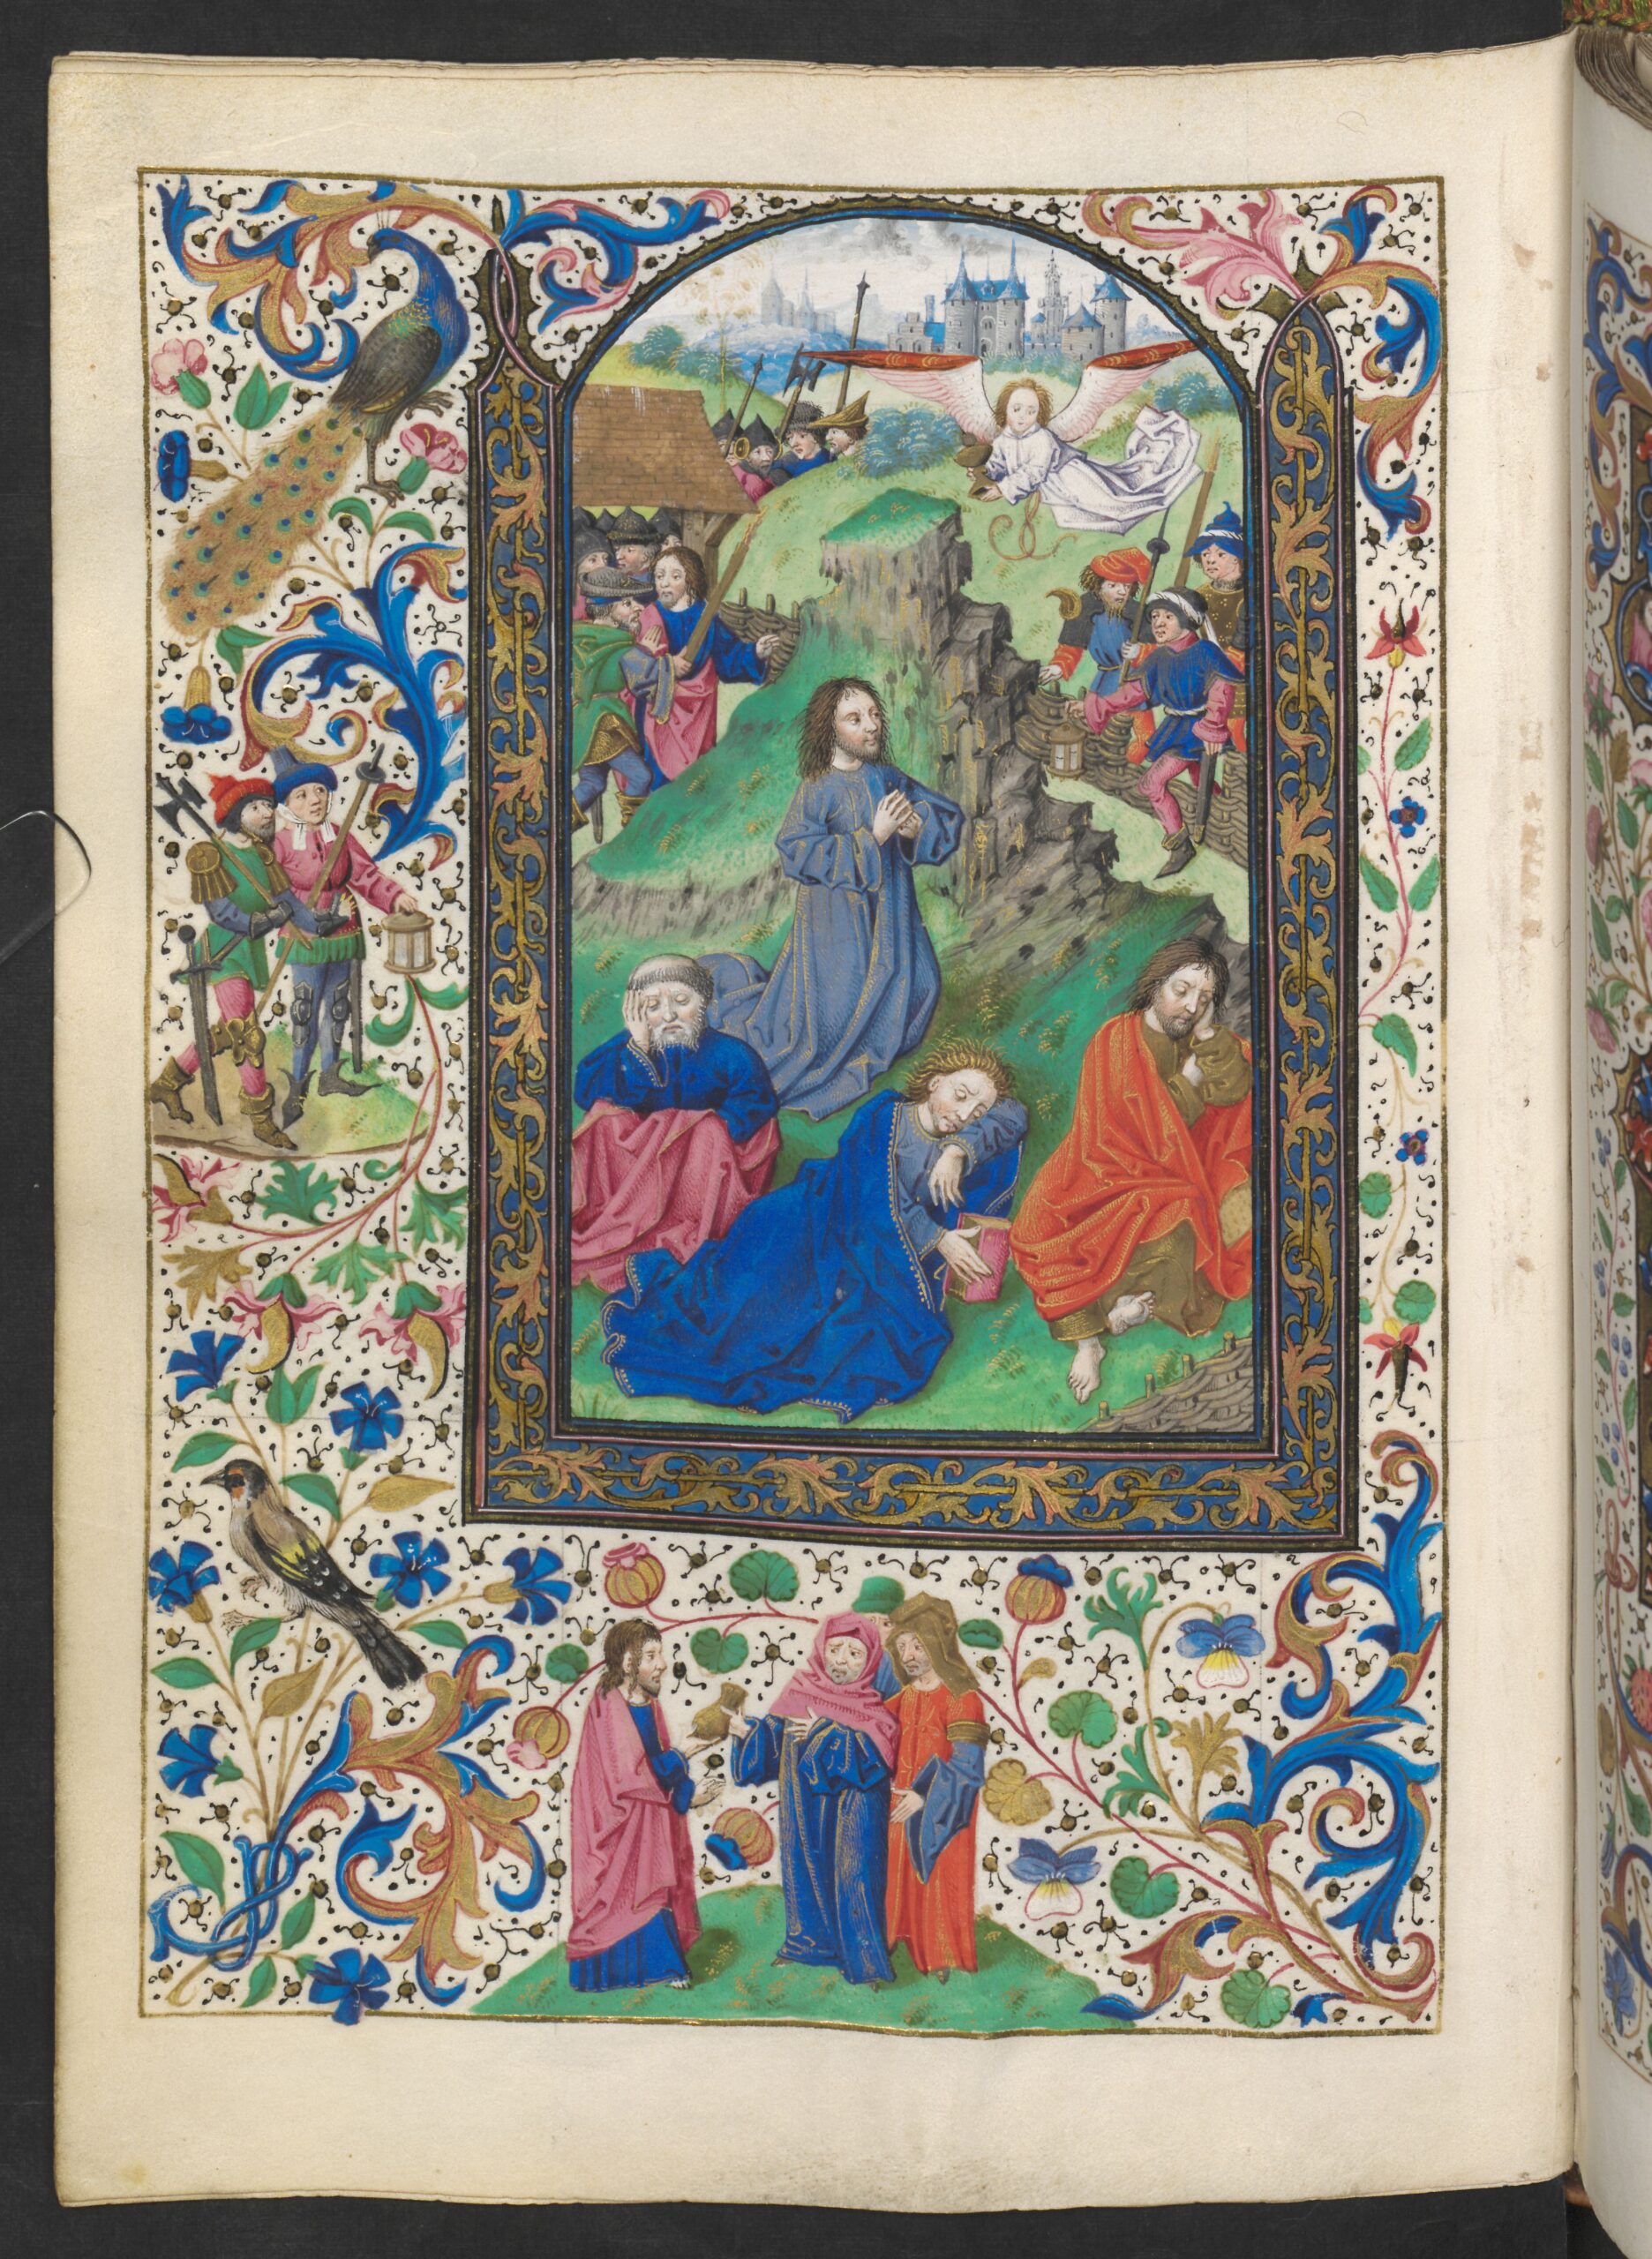 1477 Maitre viennois de Marie de Bourgogne Heures de Marie de Bourgogne ONL Codex vindobonensis 1857 fol 56v